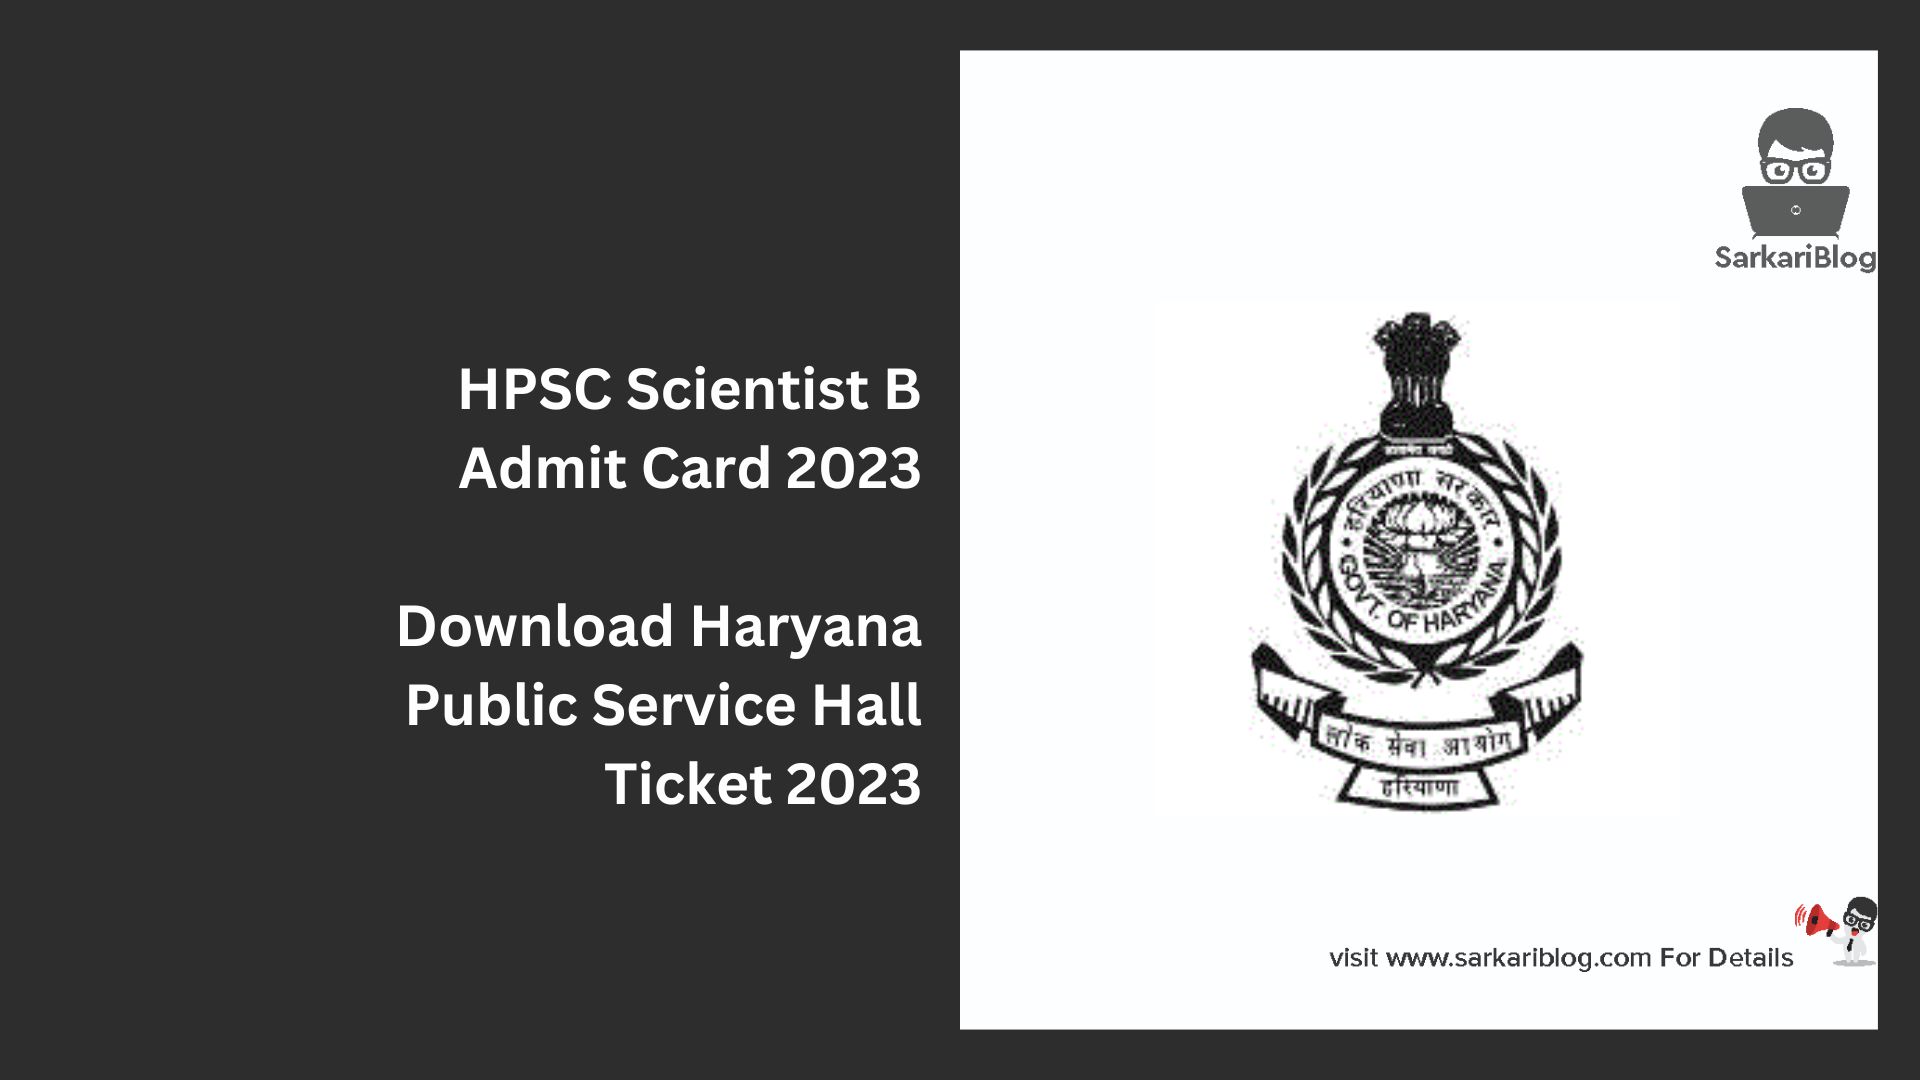 HPSC Scientist B Admit Card 2023